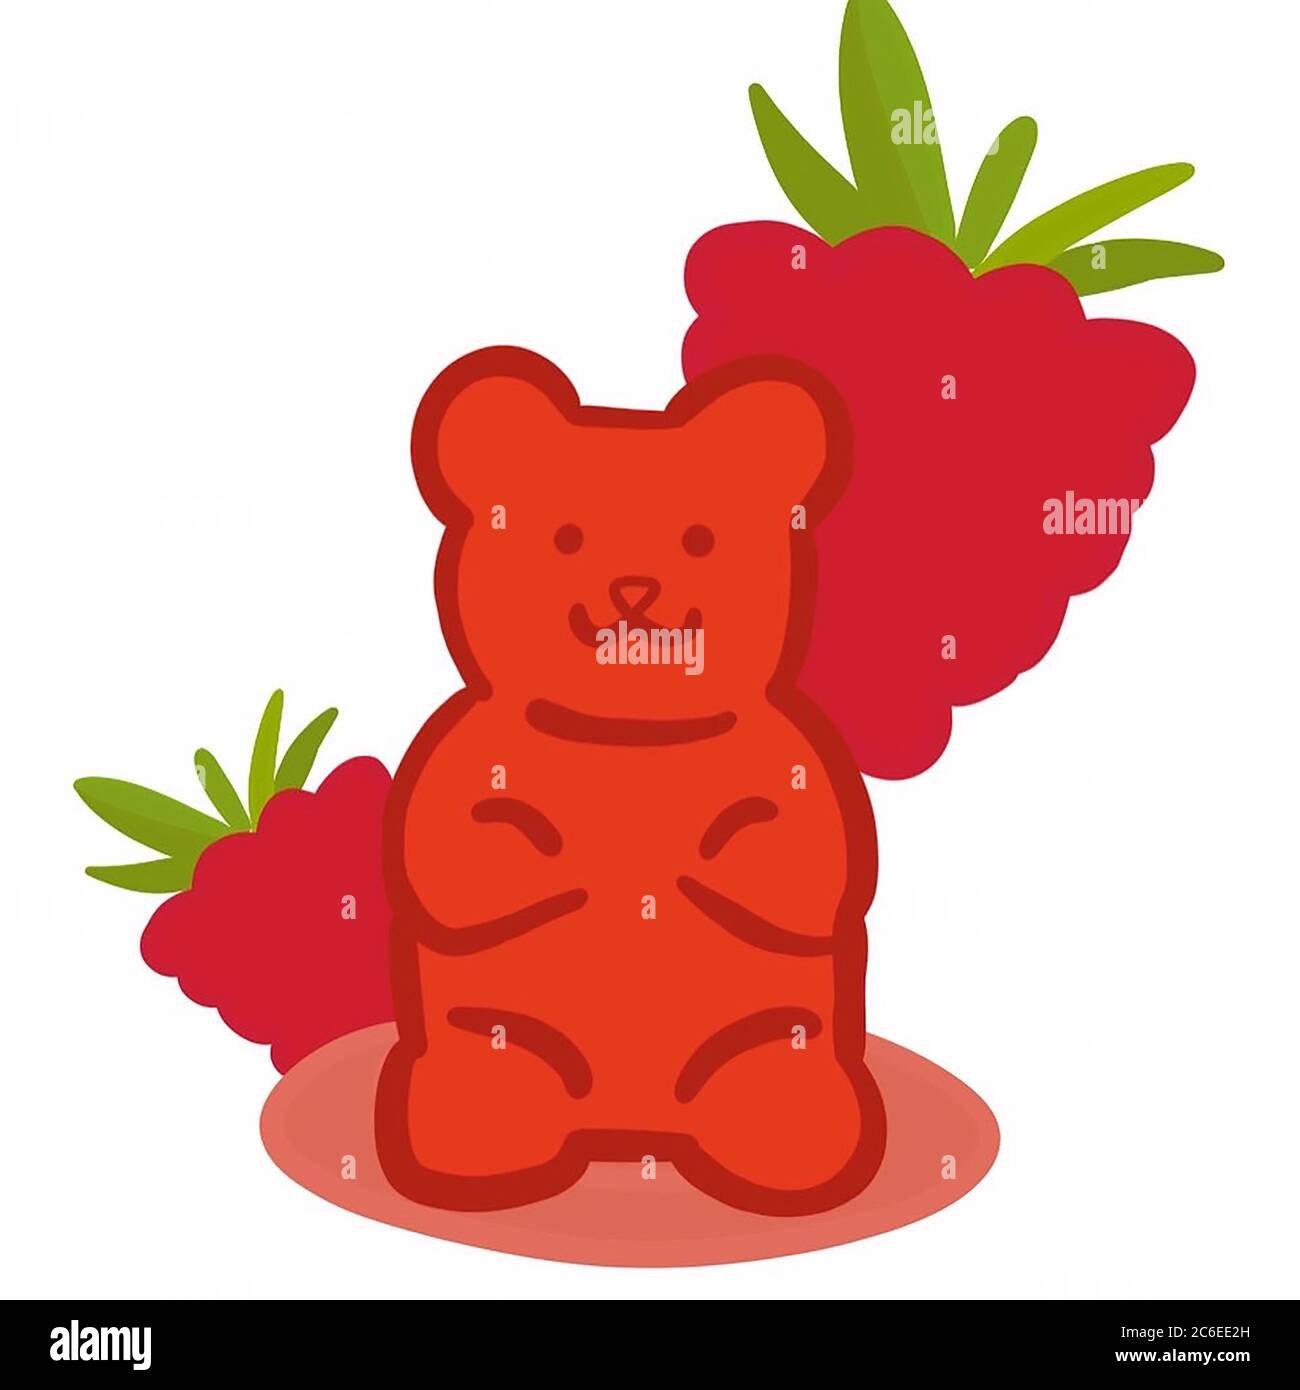 1+ Thousand Cartoon Gummy Bear Royalty-Free Images, Stock Photos